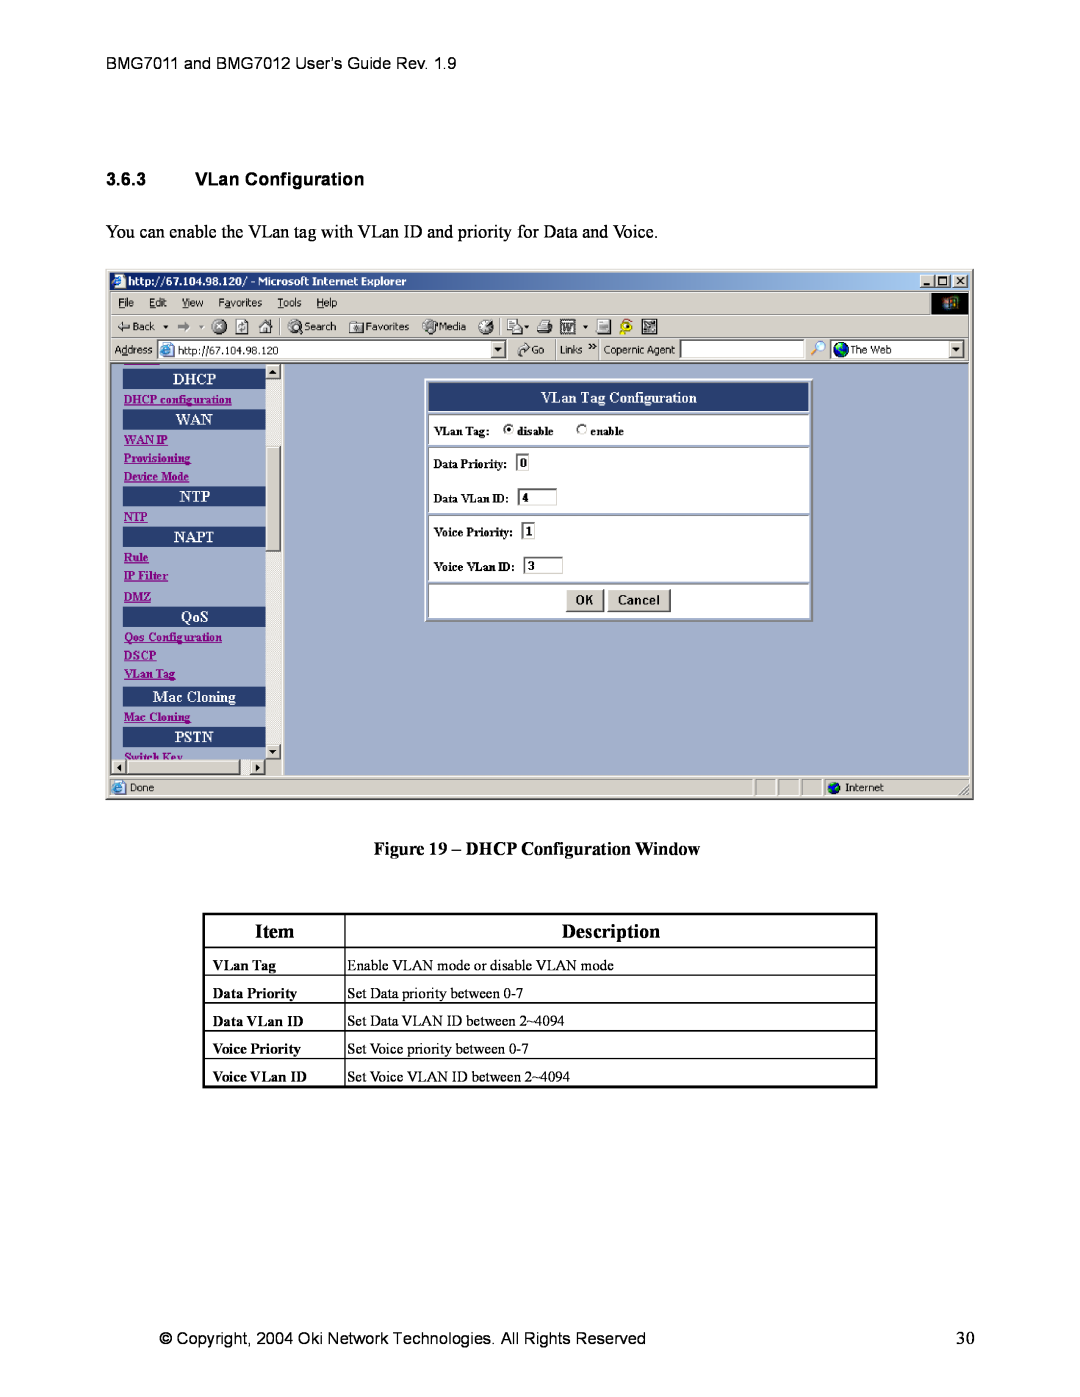 Oki BMG7012 manual 3.6.3VLan Configuration, DHCP Configuration Window, Description, VLan Tag, Data Priority, Data VLan ID 